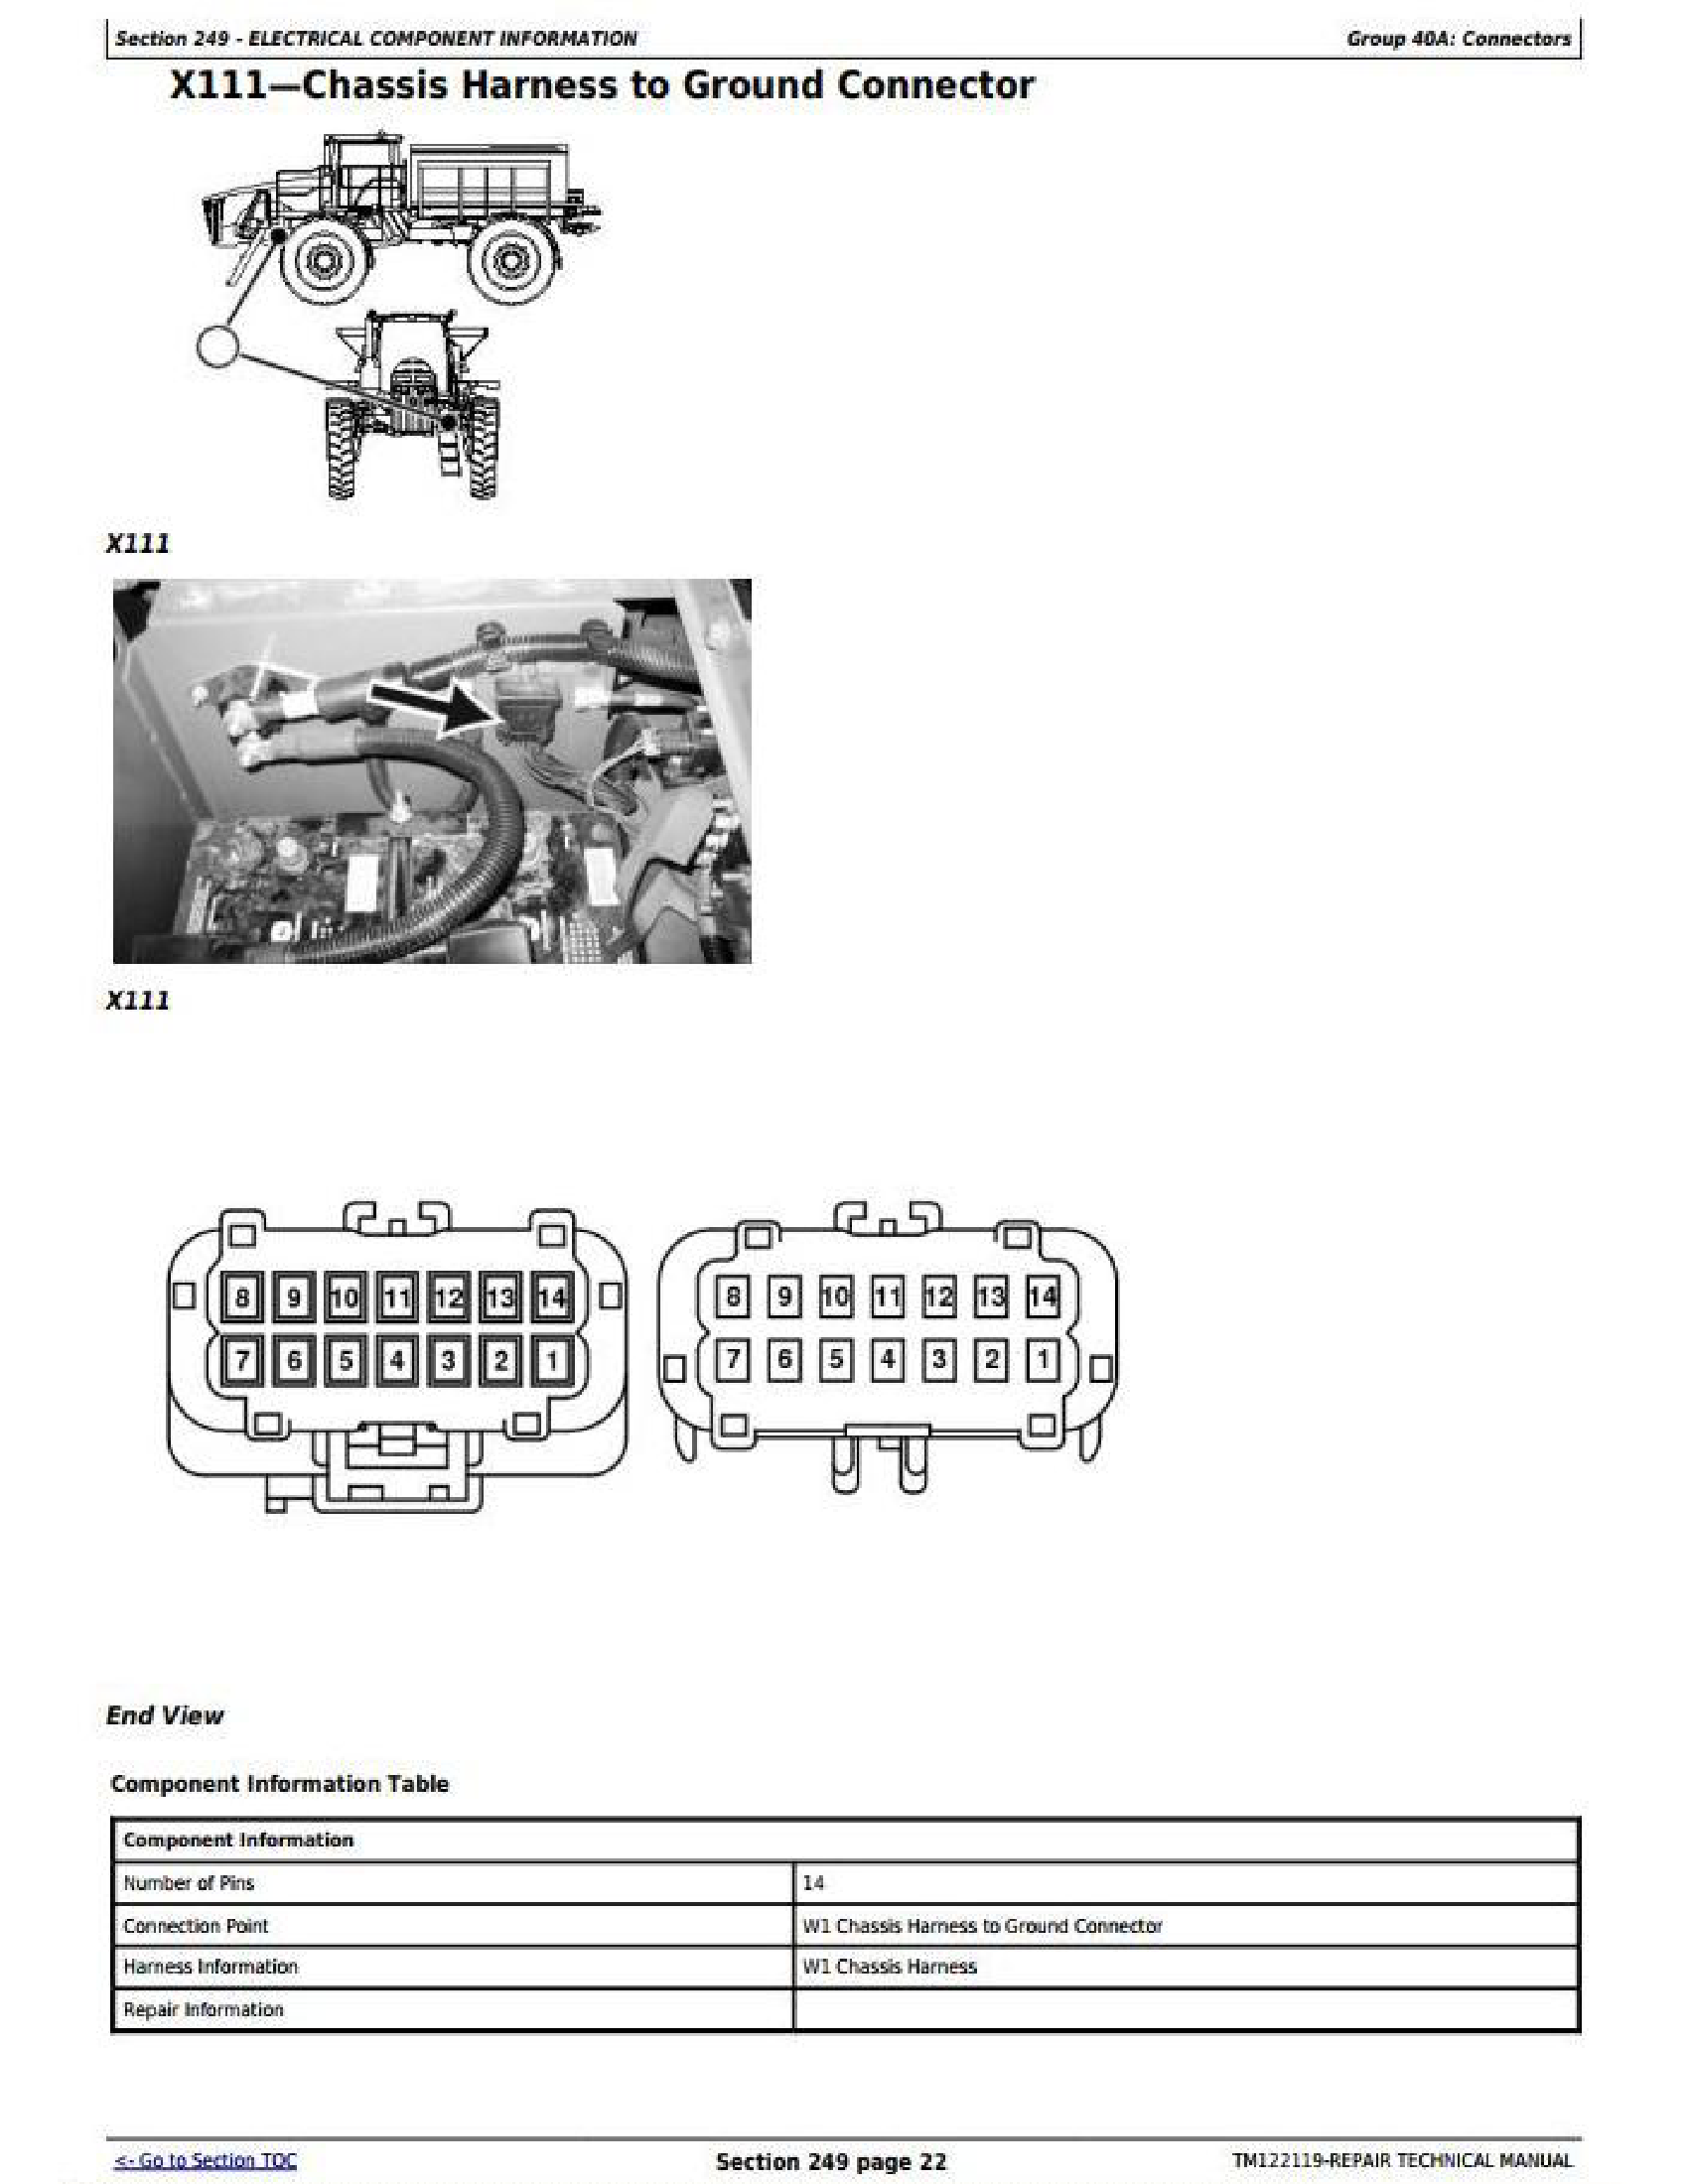 John Deere DN300 manual pdf